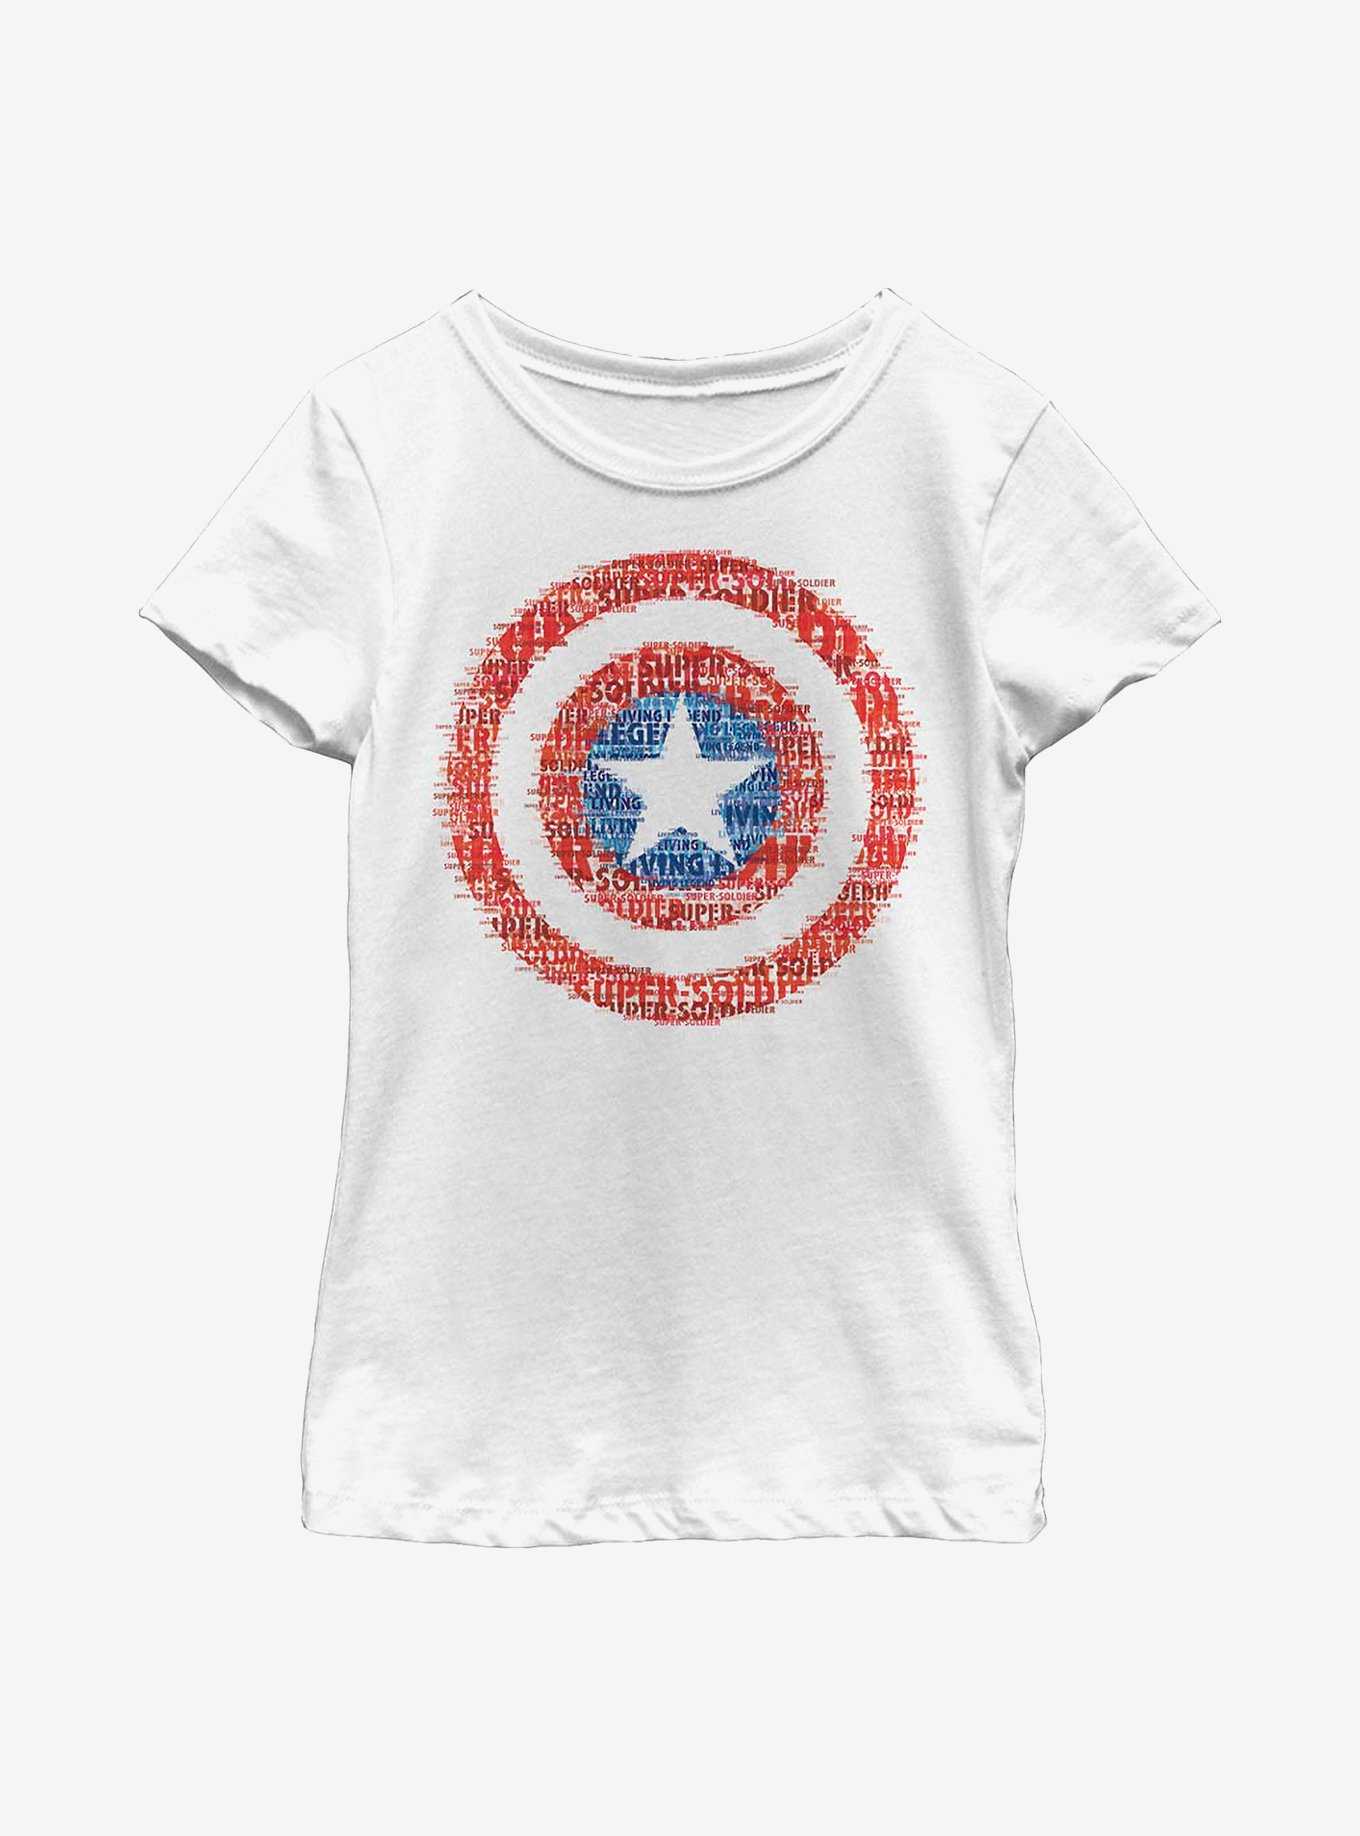 Marvel Captain America Super Soldier Youth Girls T-Shirt, , hi-res